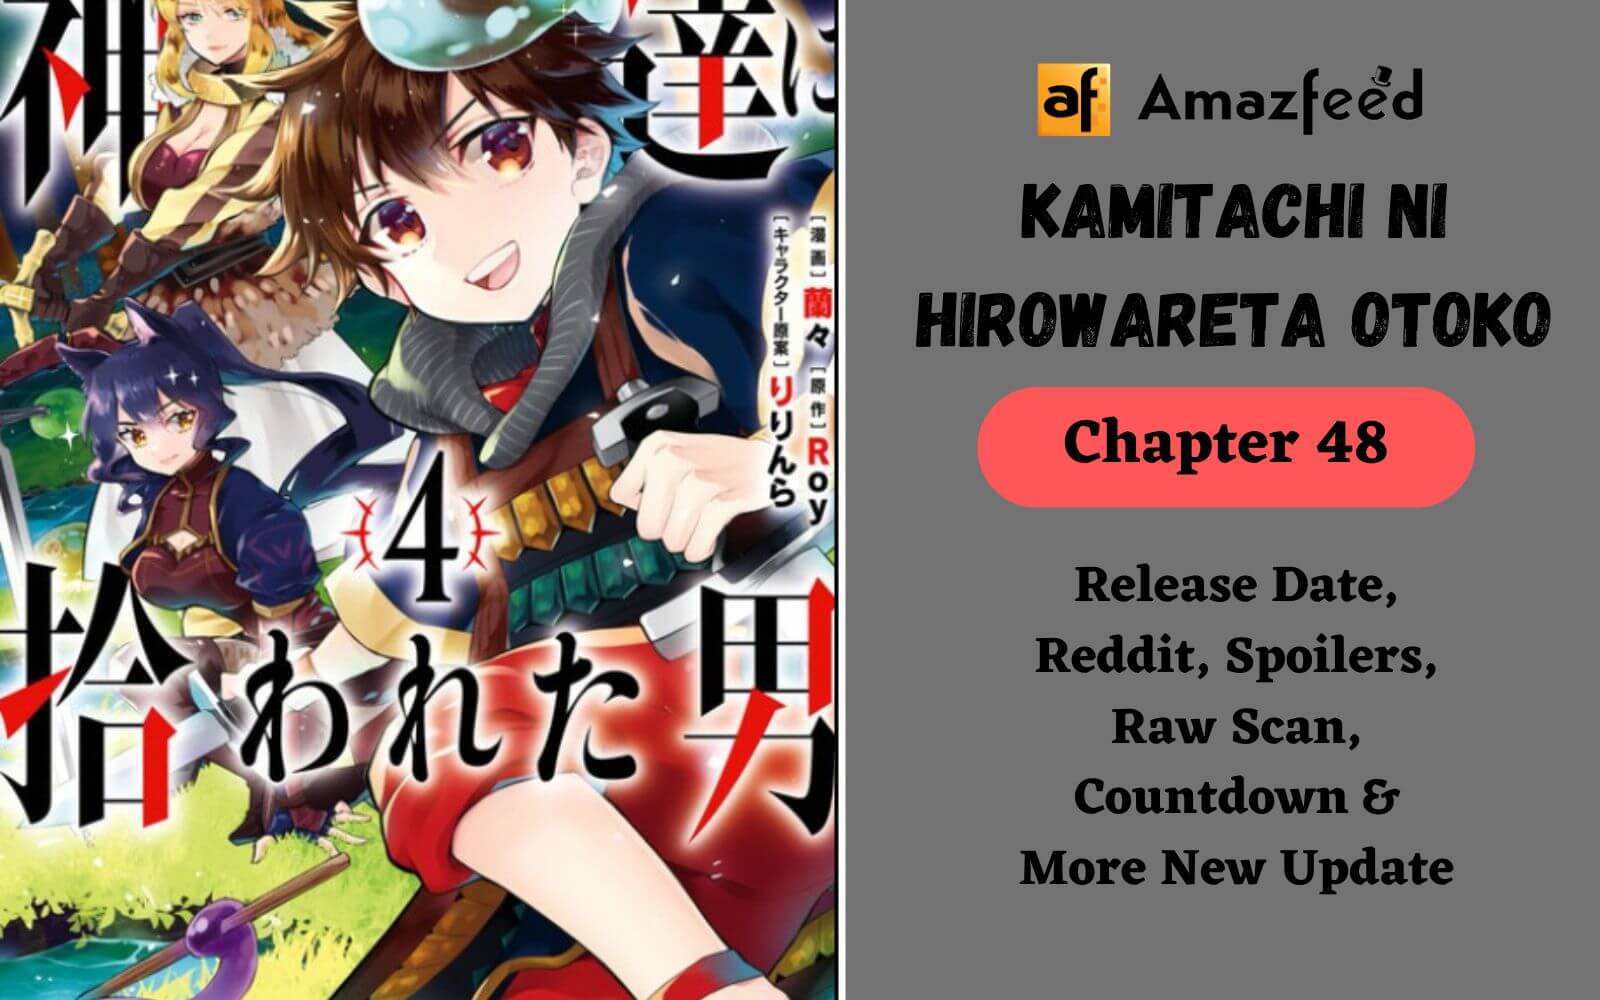 Kami-tachi ni Hirowareta Otoko - Episode 3 discussion : r/anime